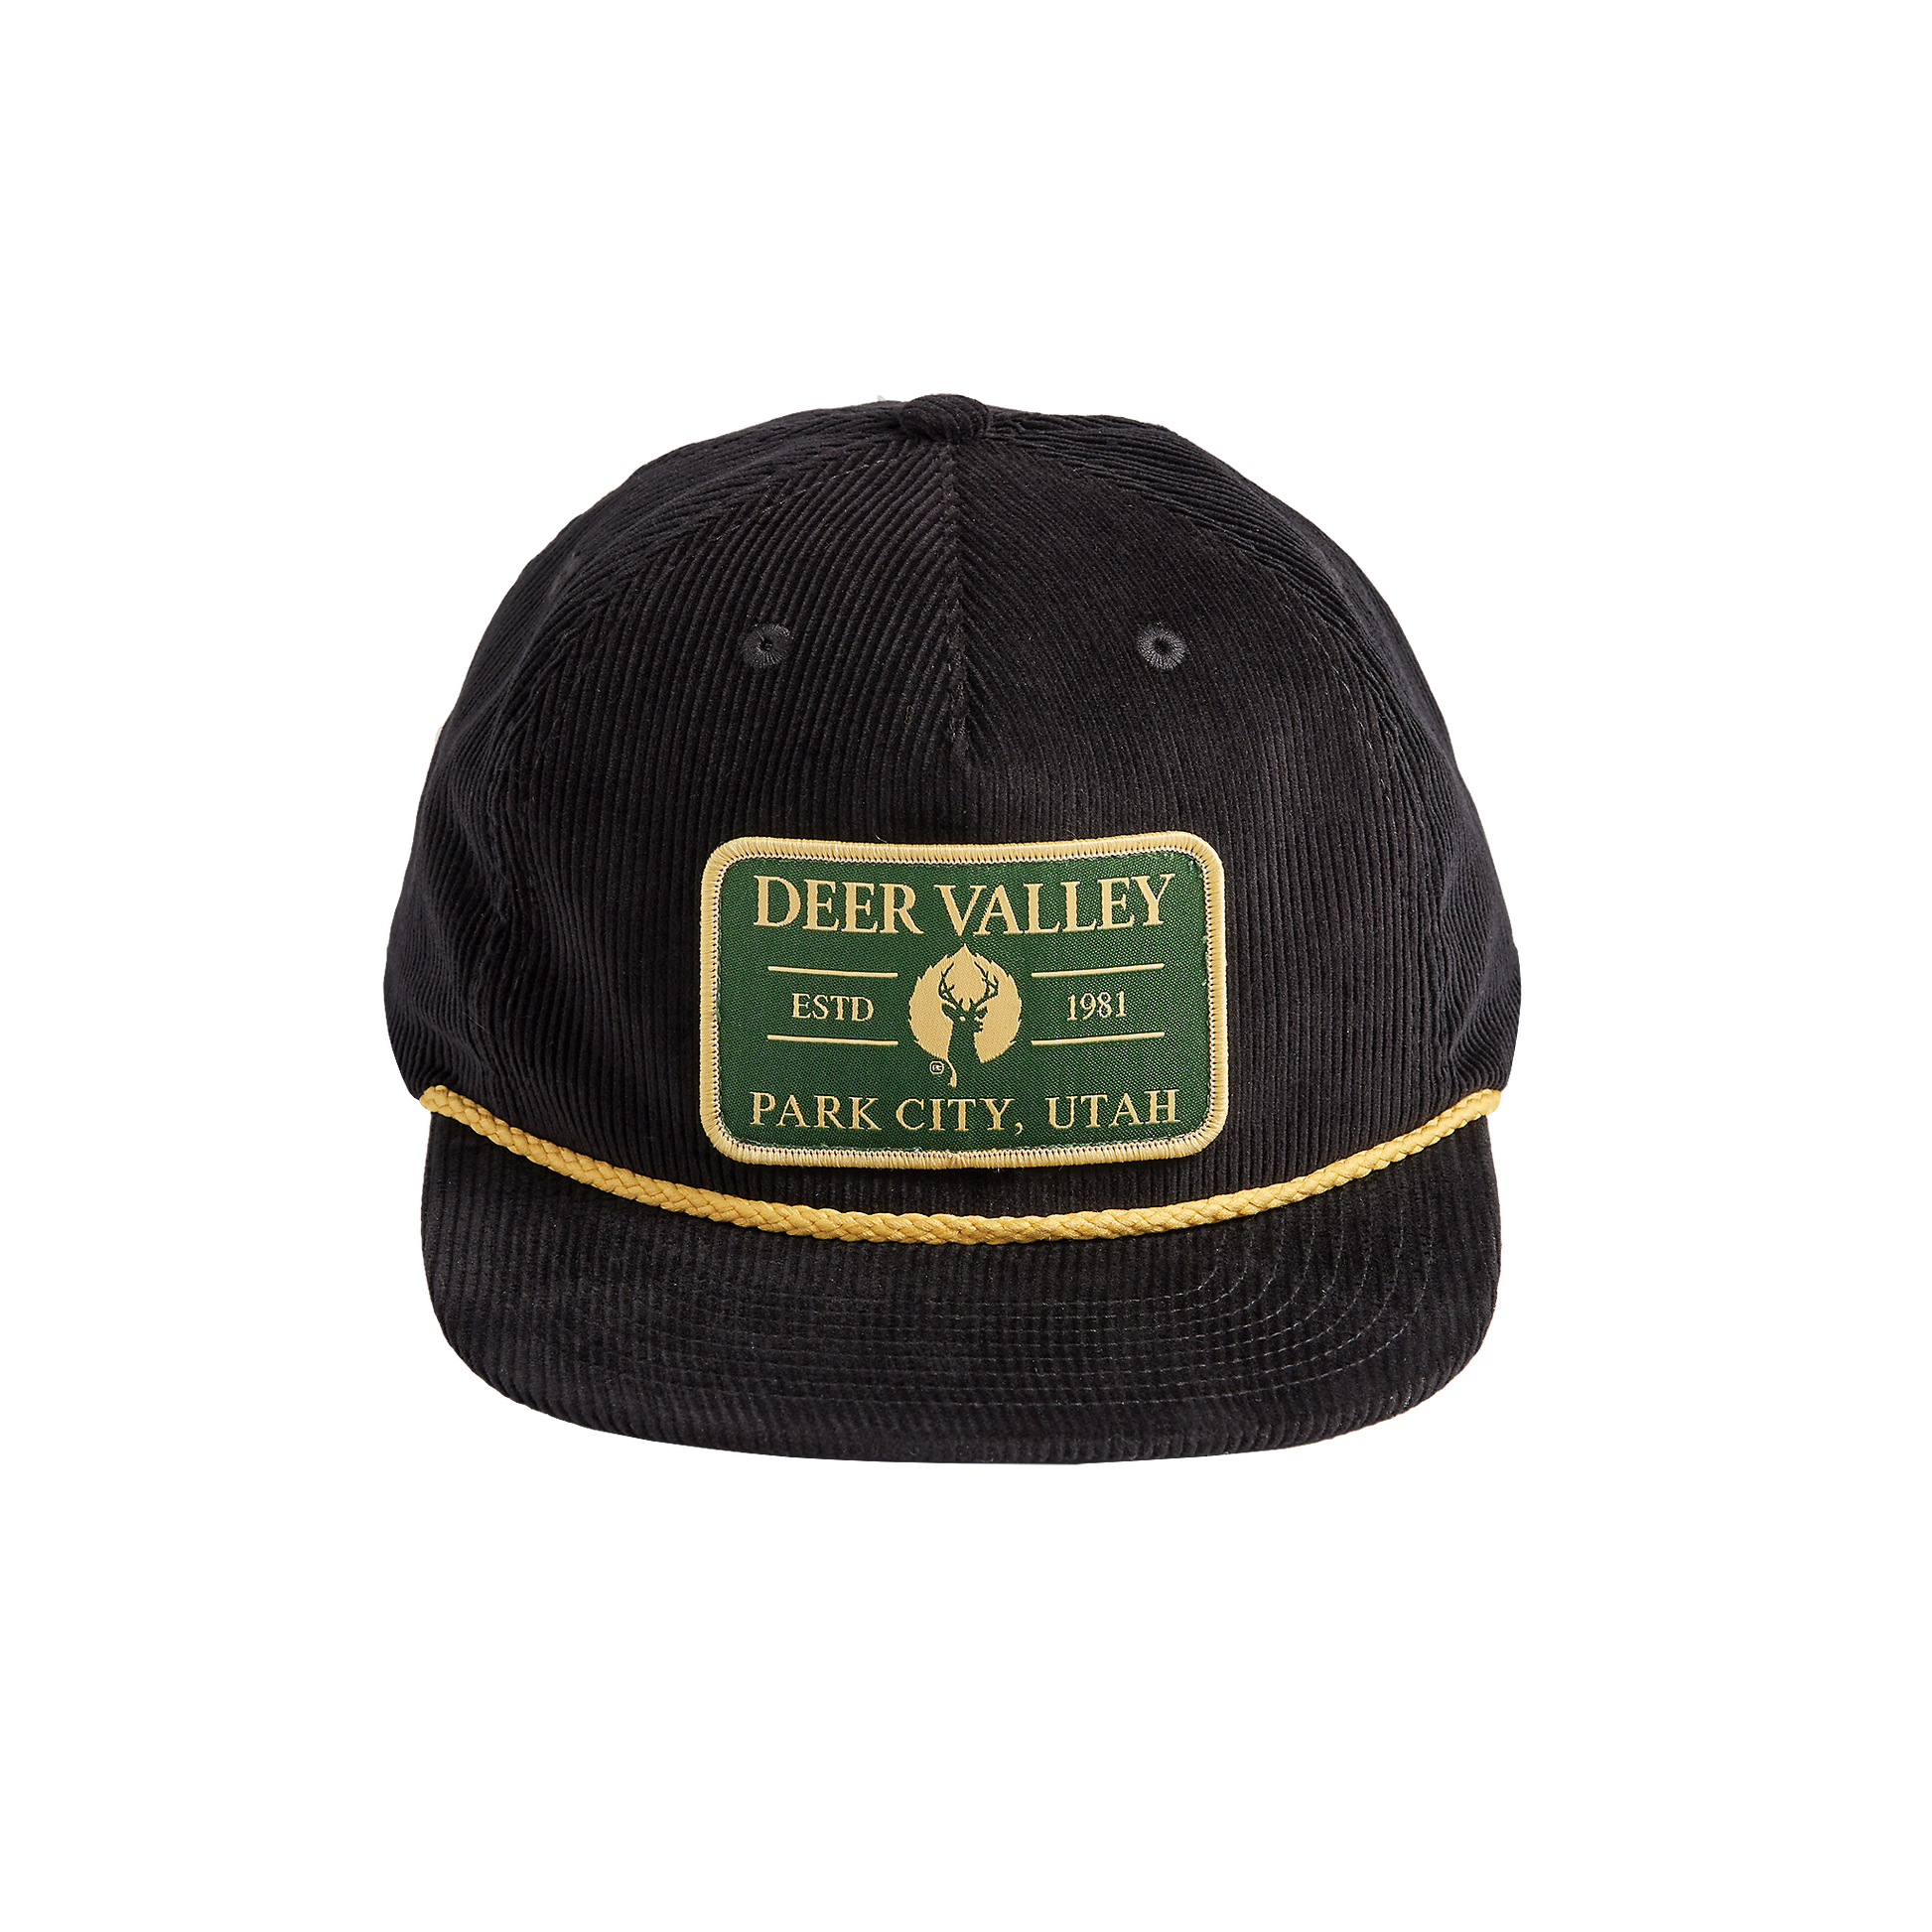 Black corduroy cap with golden rope across brim and adjustable snapback